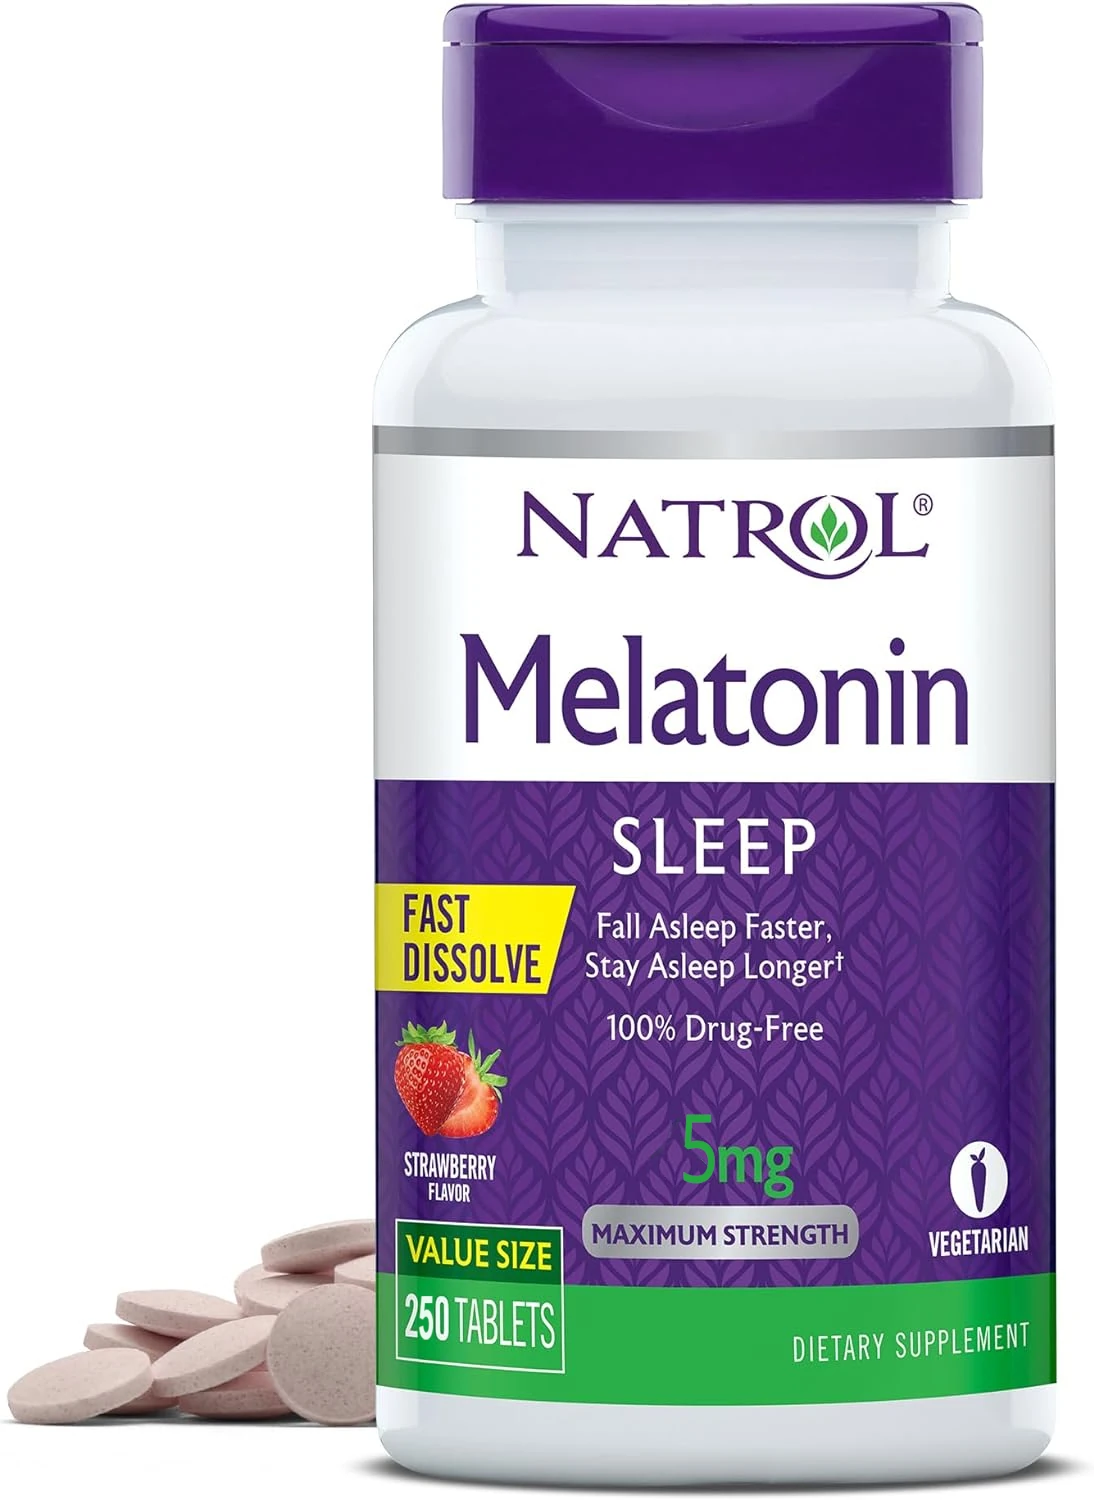 Strawberry Flavored Melatonin Tablets, Natrol Melatonin 5mg Fast Dissolve Tablets for Sleep Aid, 250